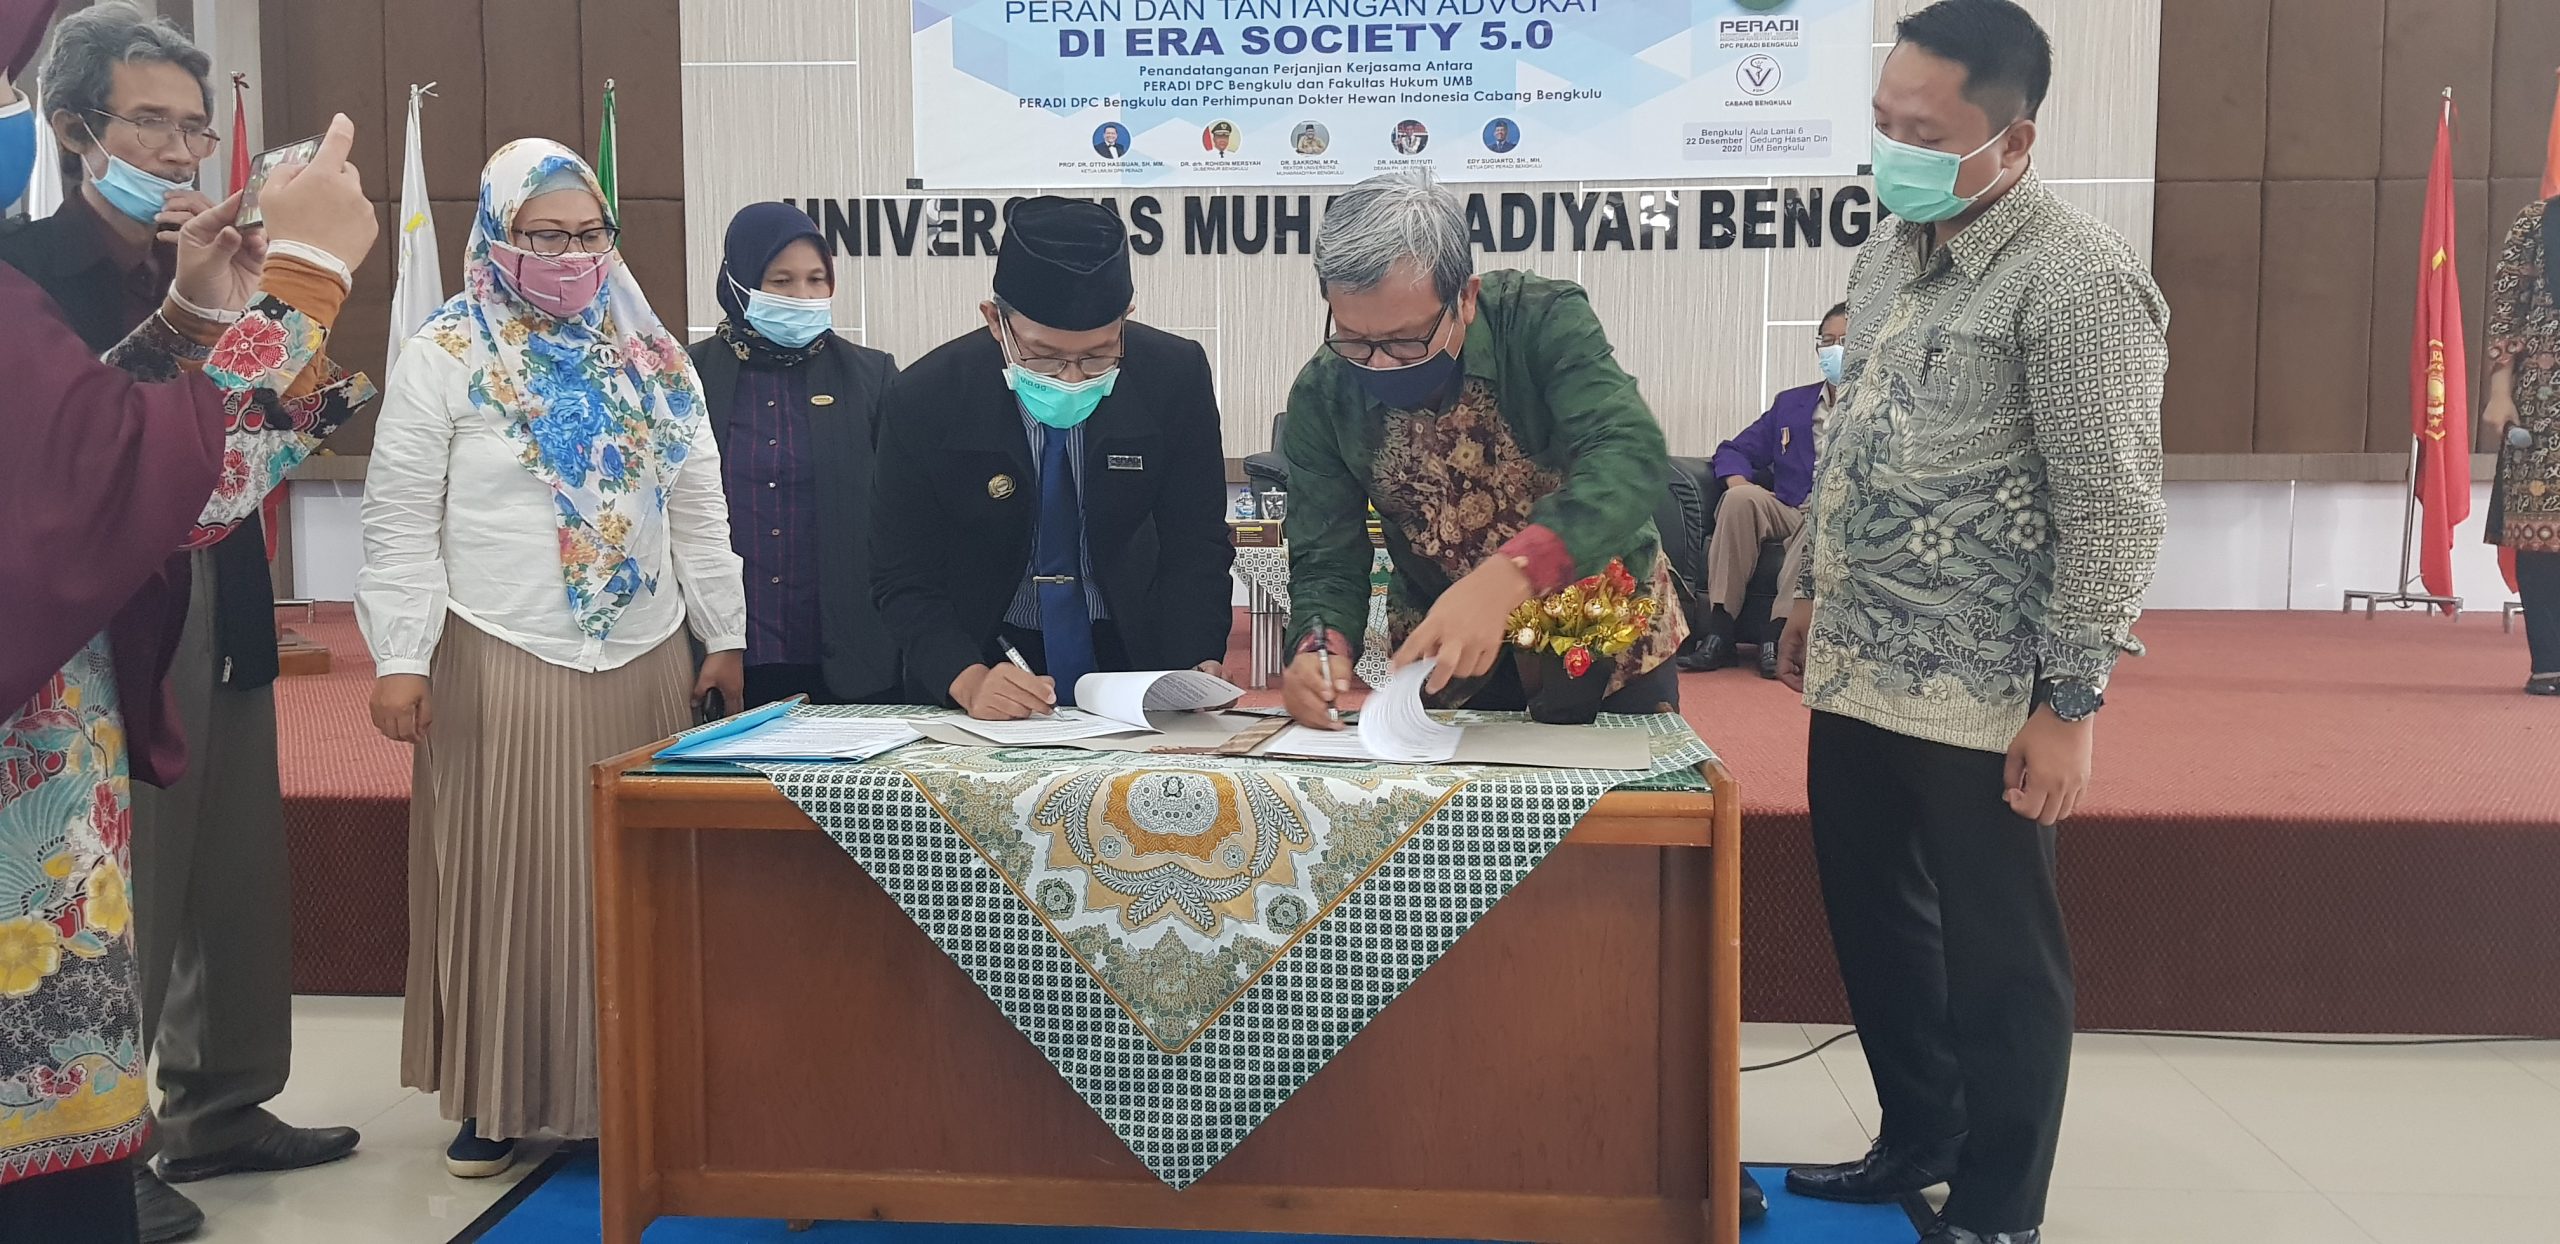 Penandatanganan Perjanjian Kerjasama Antara PERADI DPC Bengkulu dan Fakultas Hukum